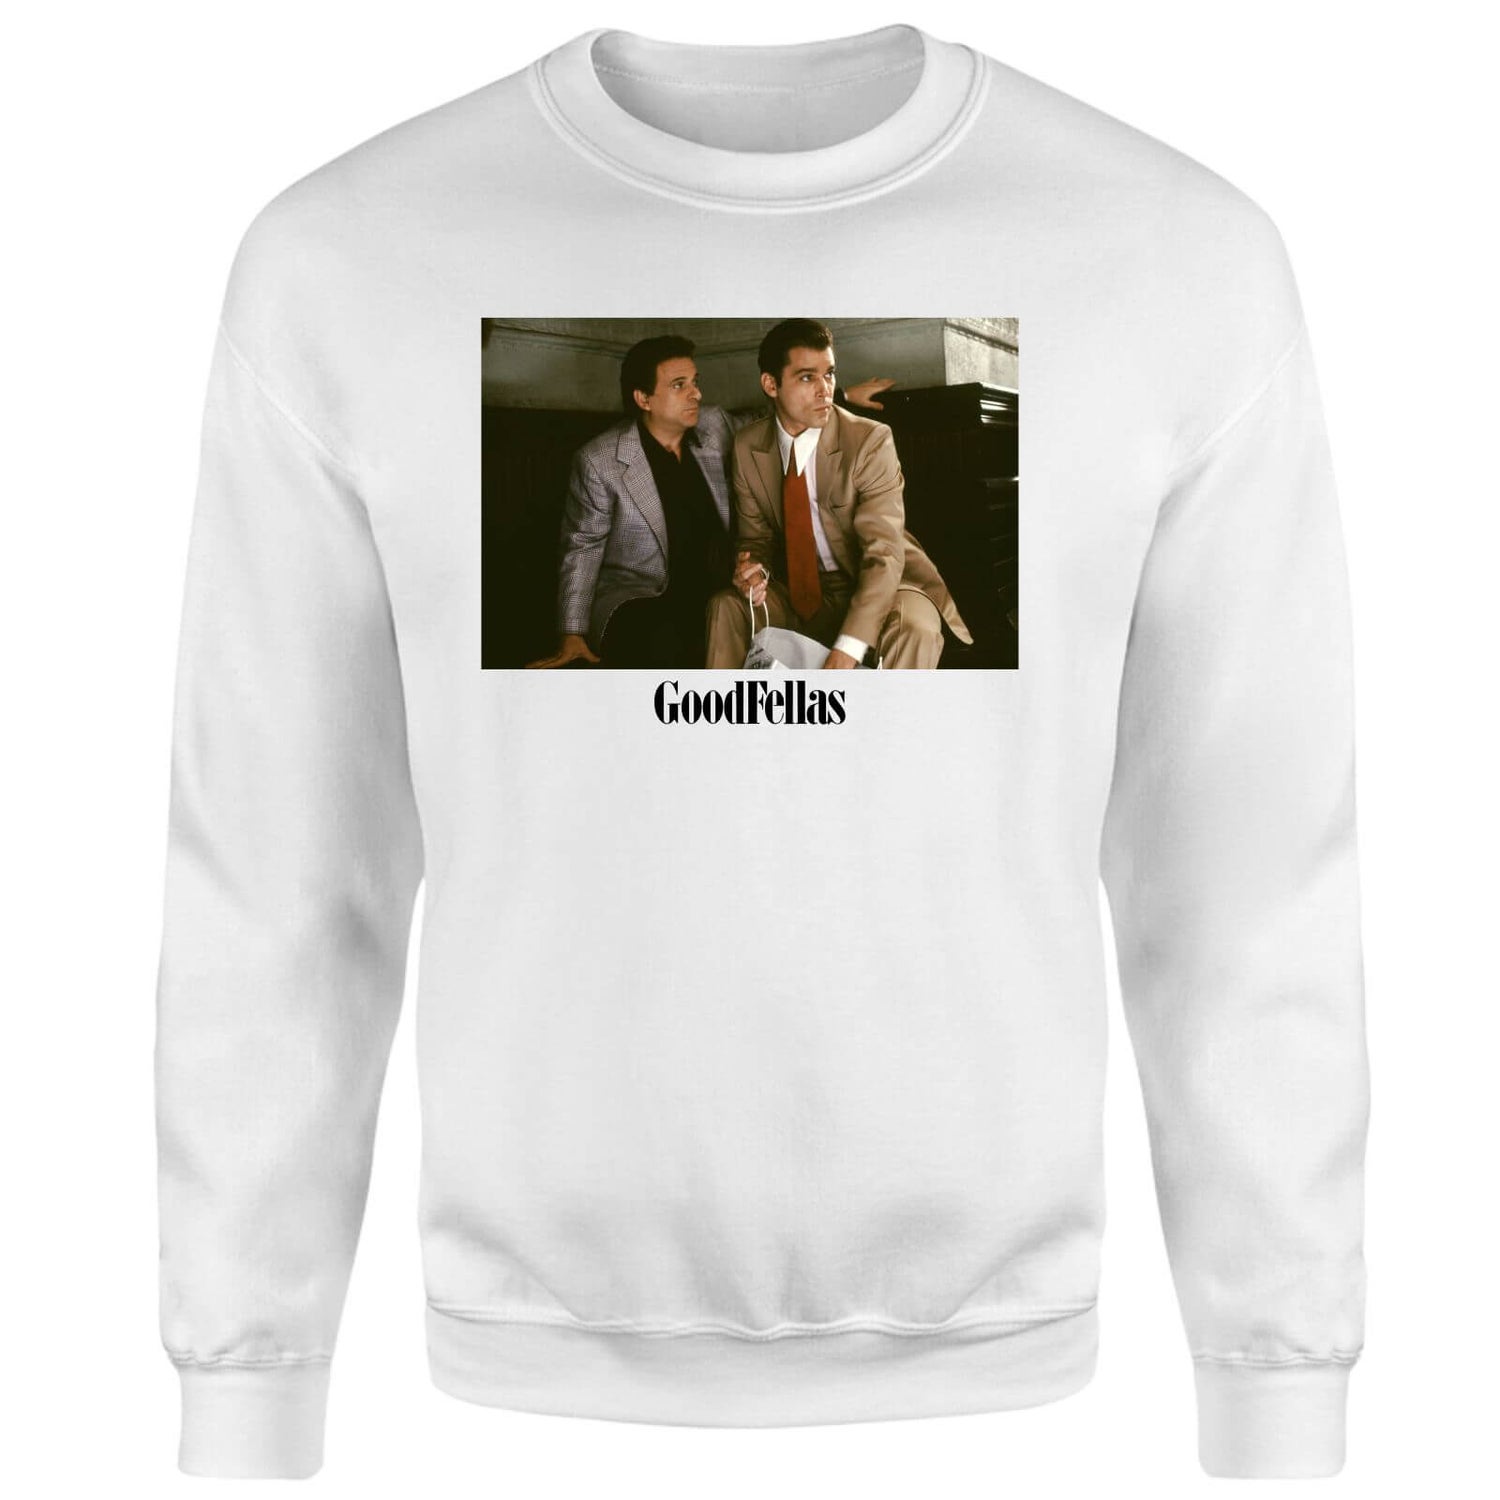 Goodfellas Joe Pesci And Ray Liotta Sweatshirt - White